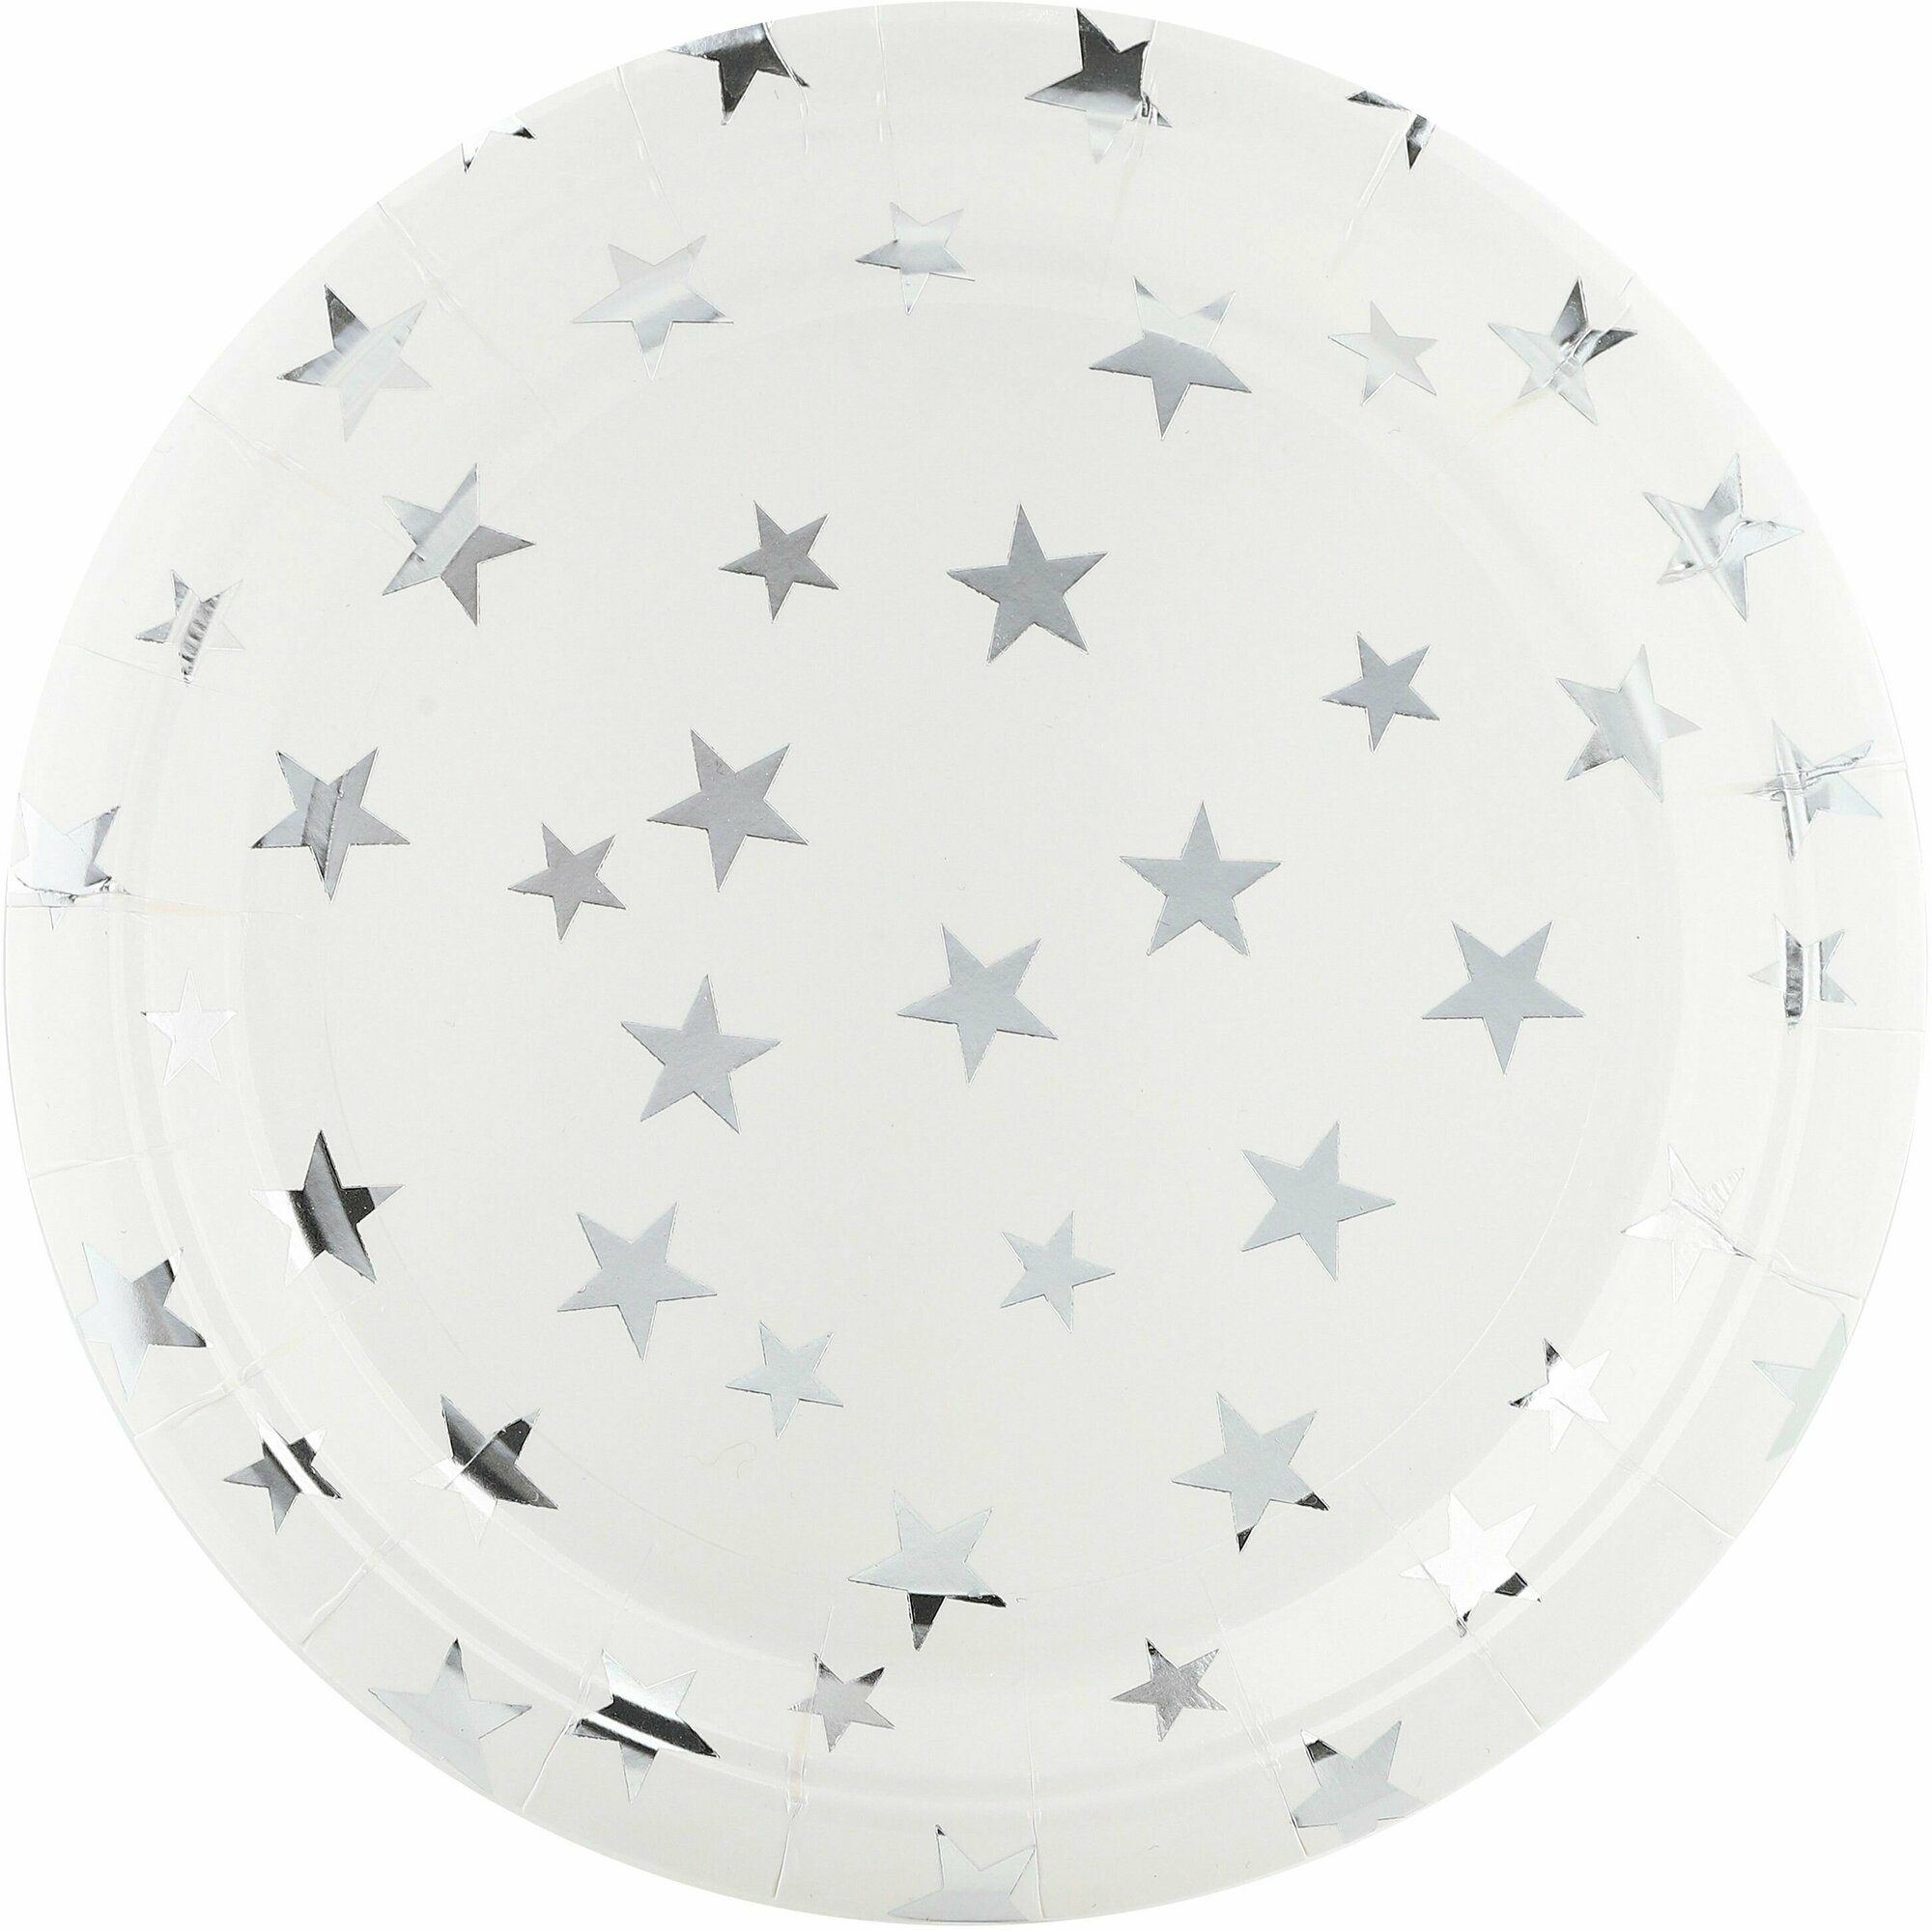 Тарелки одноразовые бумажные/Набор одноразовых бумажных тарелок для праздника (7'/18 см) Серебристые звезды, Белый/Серебро, Металлик, 6 шт.